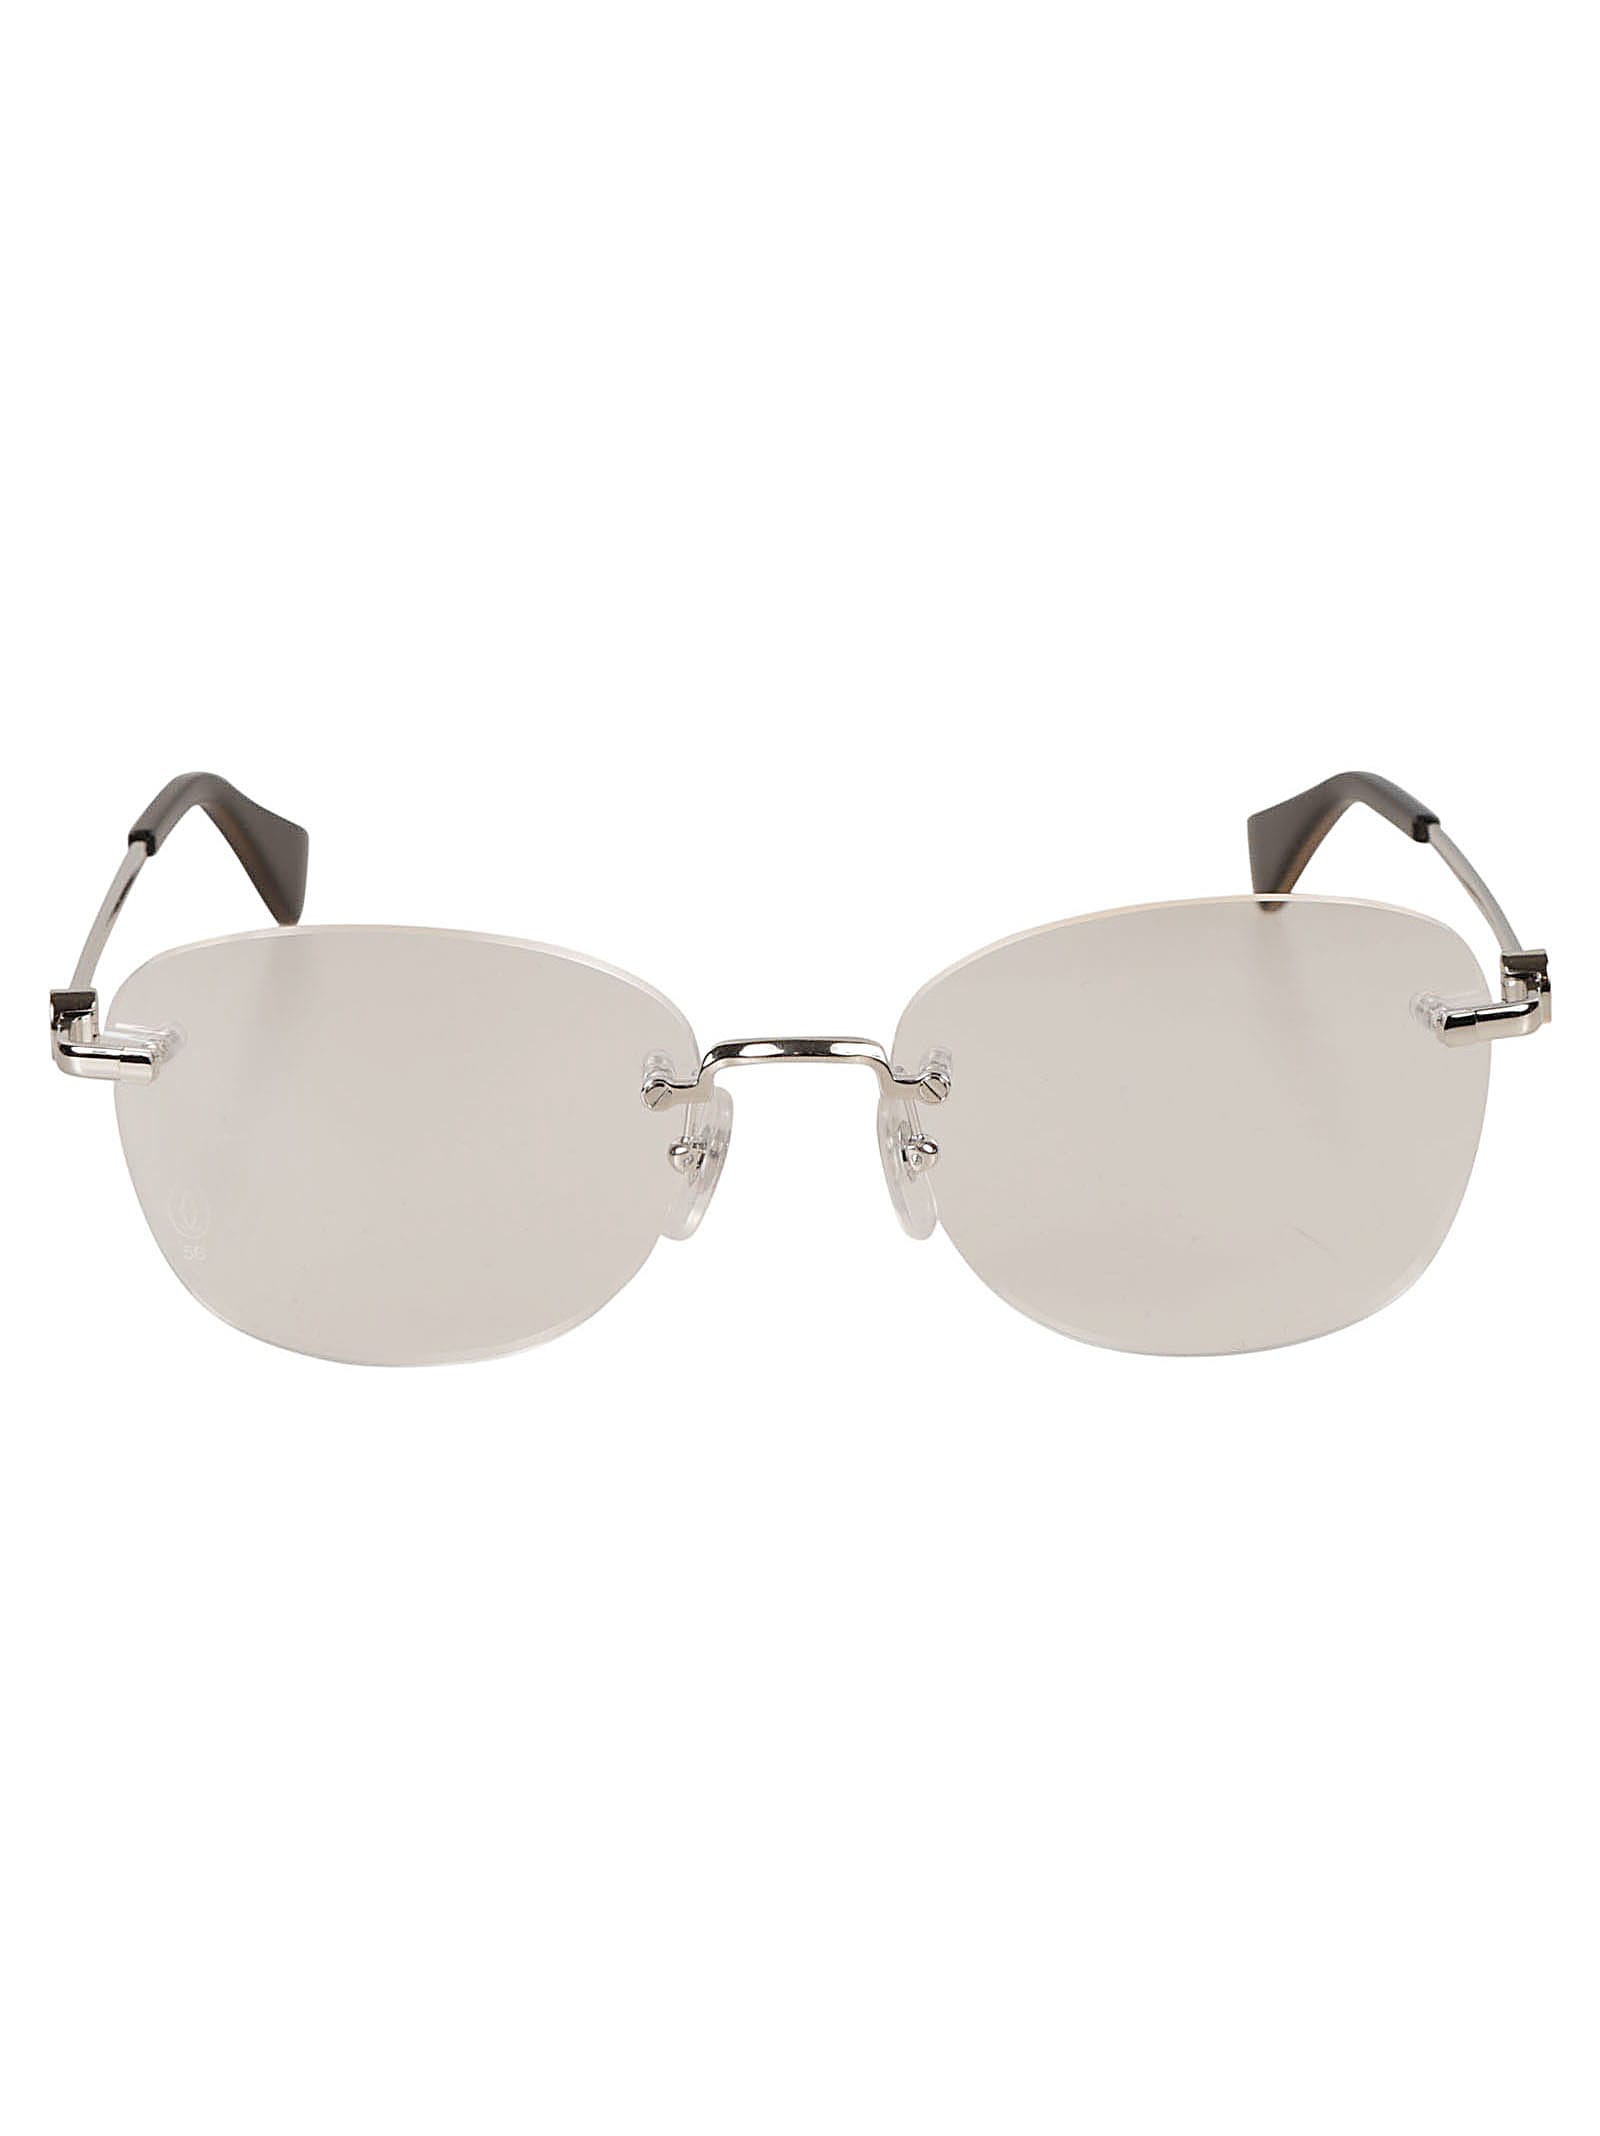 Cartier Wayfarer Frame Glasses In Silver